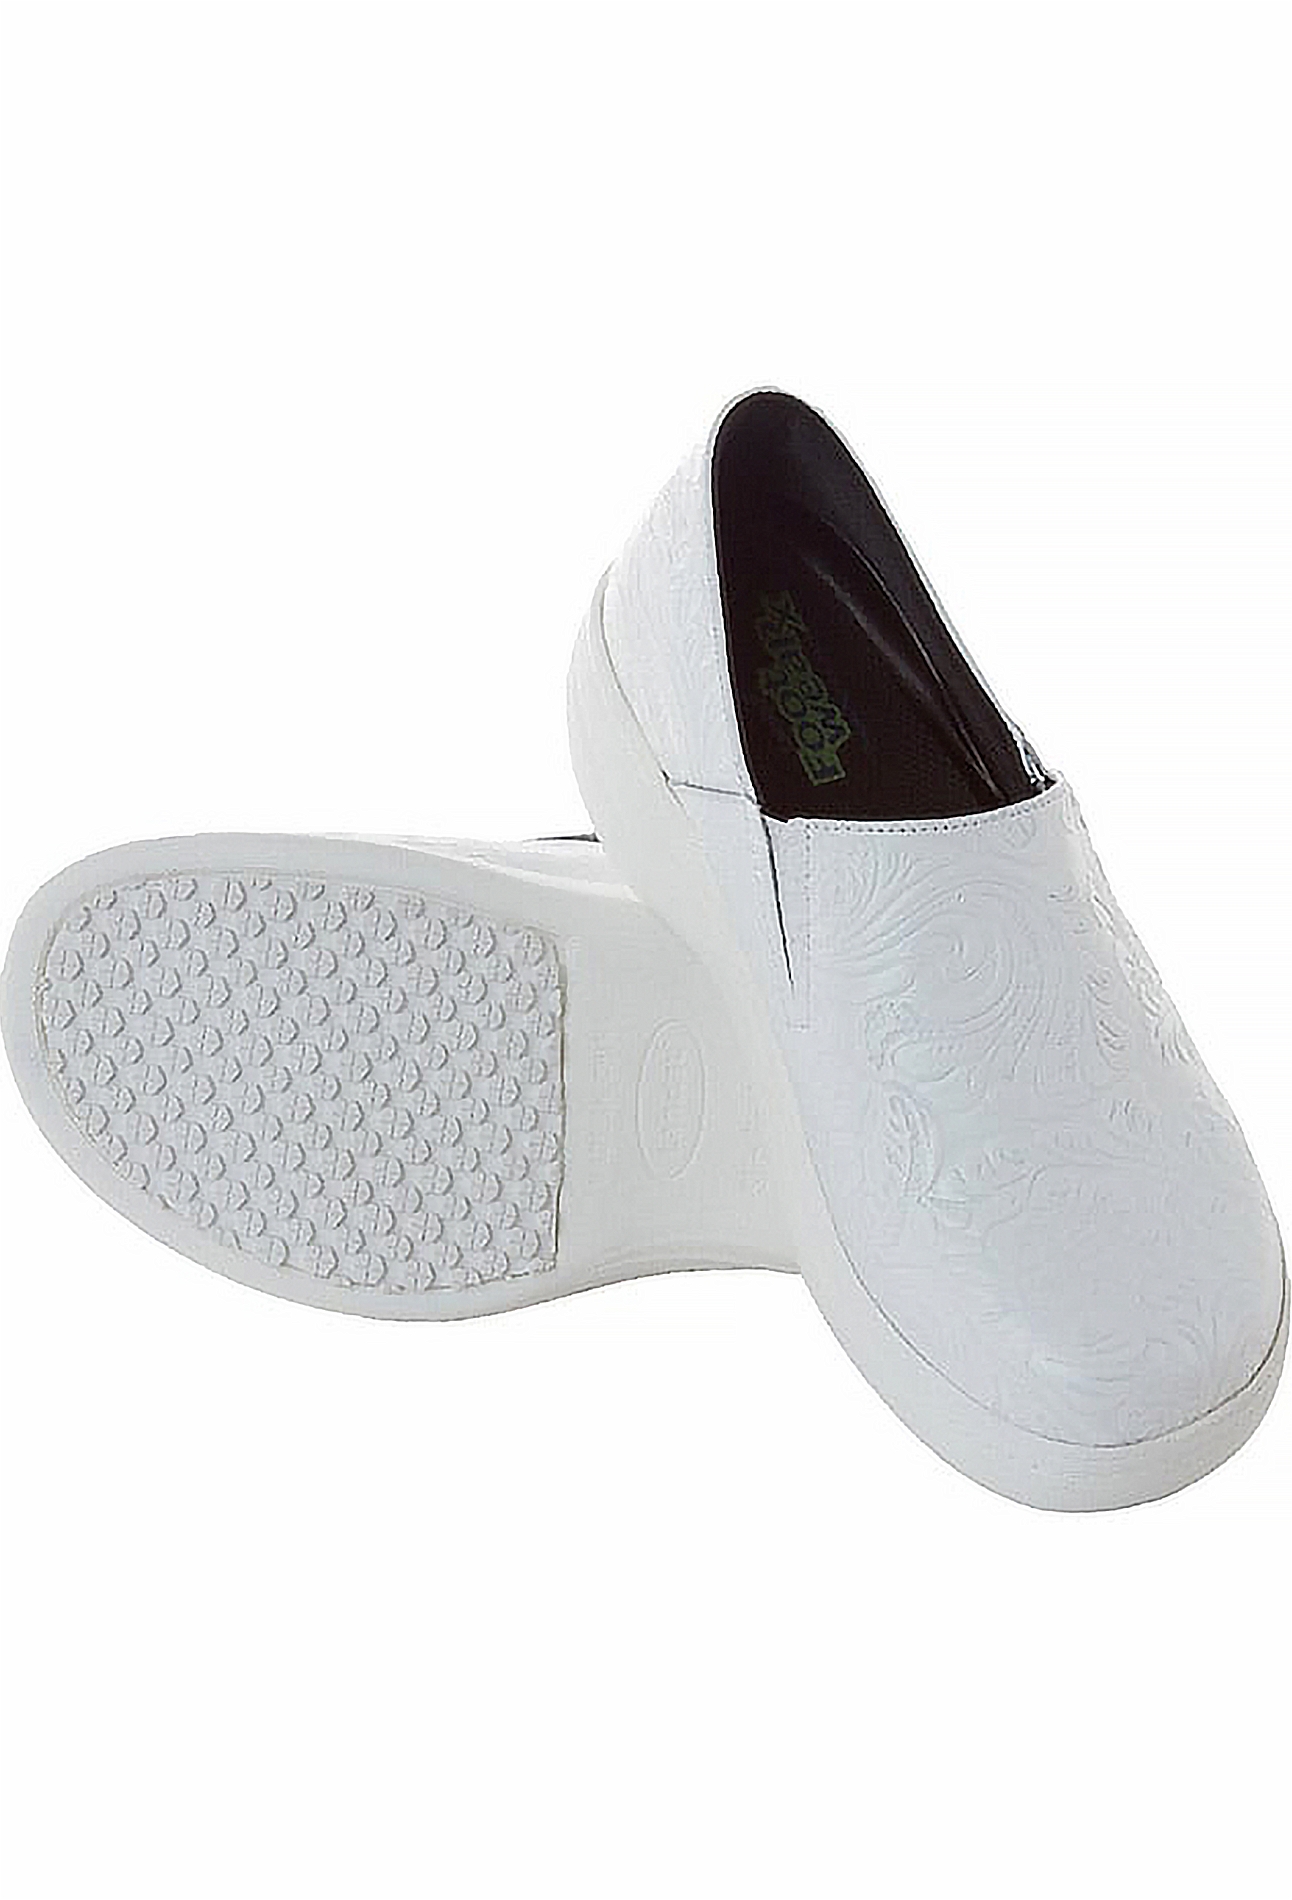 Landau Footwear Leather Slip Resistant Clogs-VITALITY